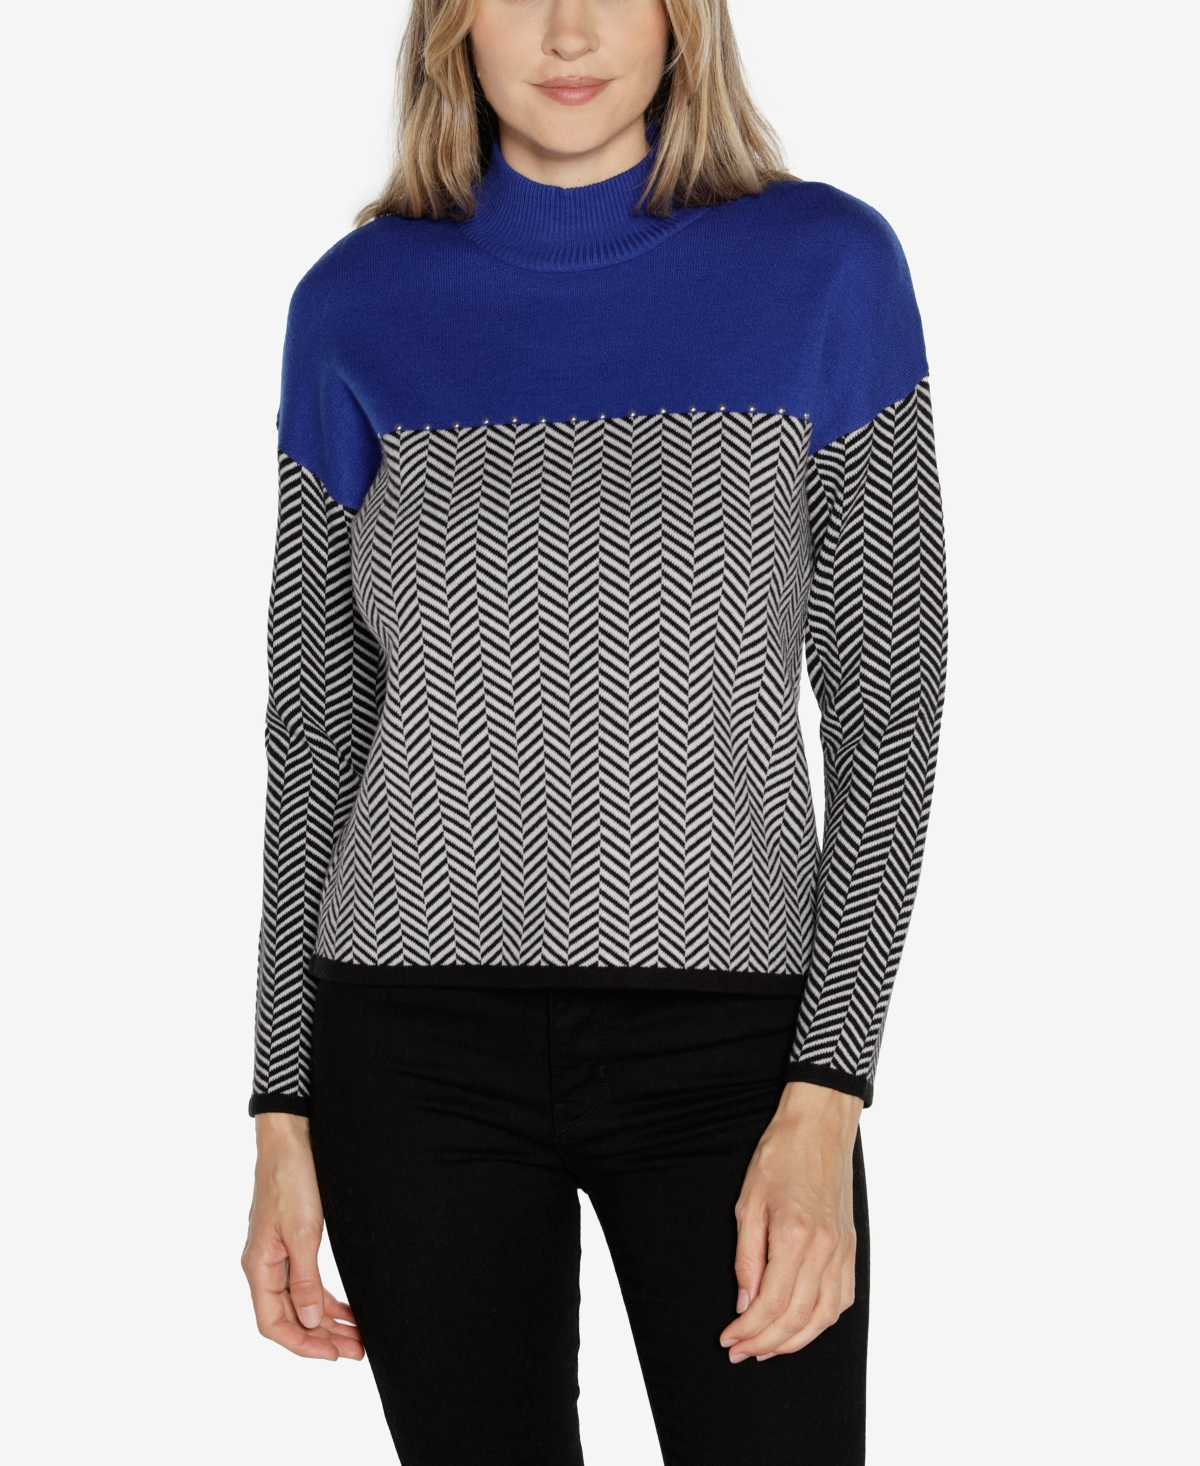 Women's Embellished Colorblock Sweater - Cobalt Combo